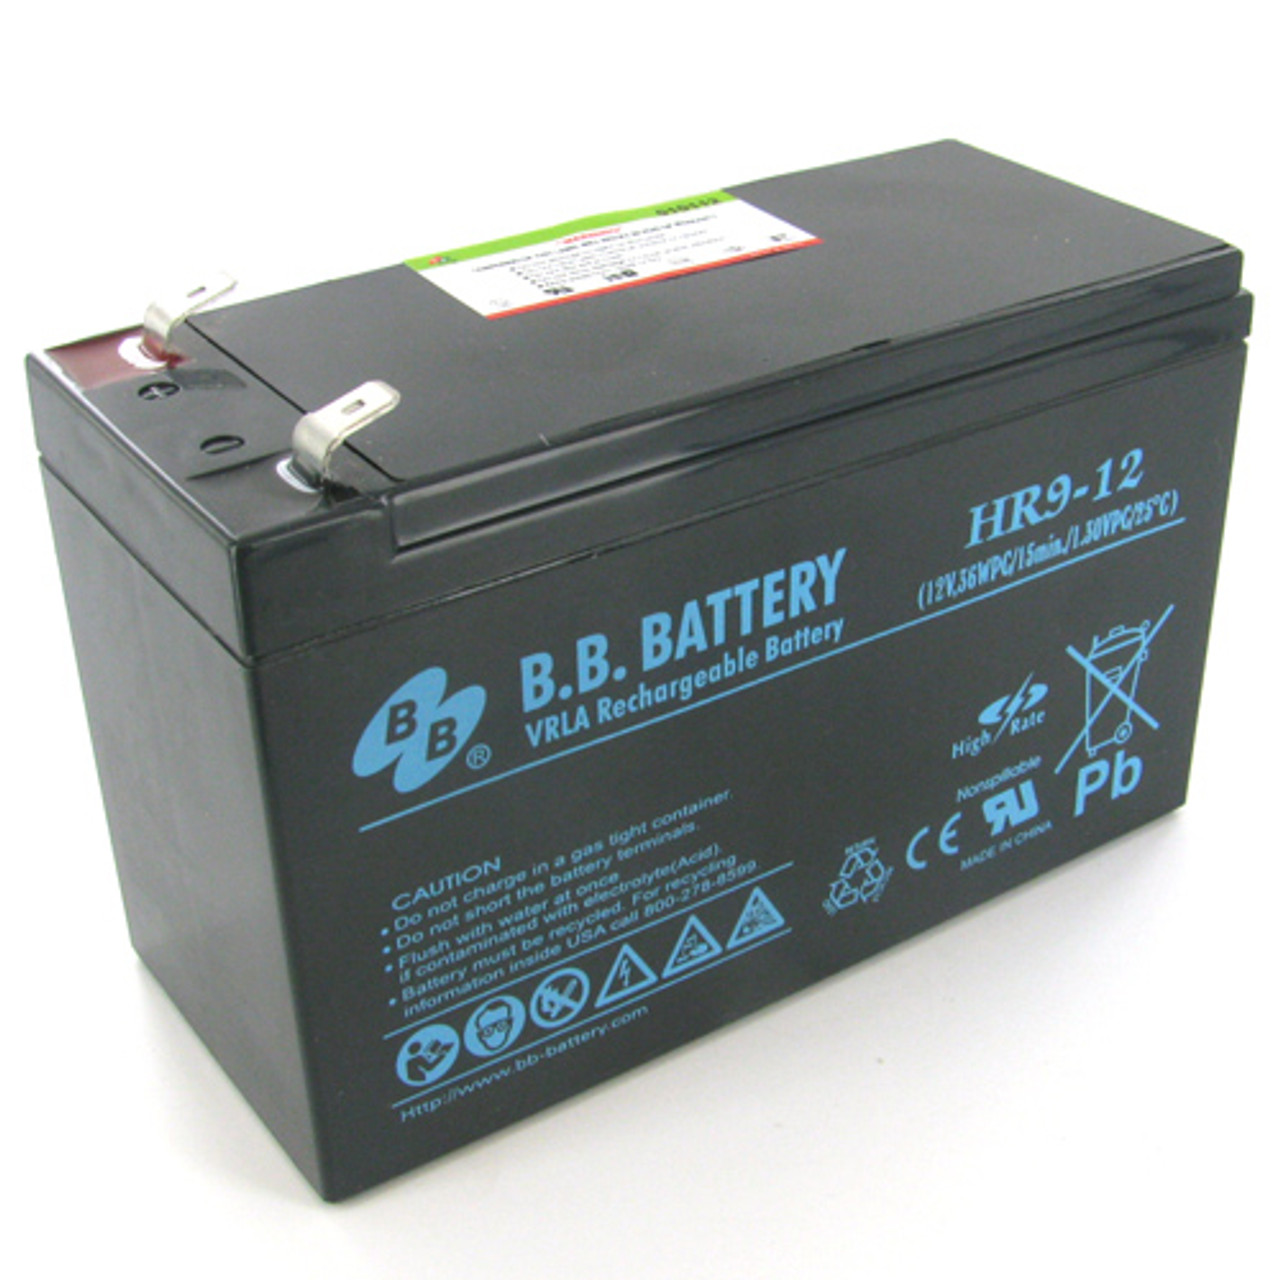 B b battery 12 12. B.B. Battery HRC 1234w. Аккумулятор BB Battery sh 4.5-12 (12v / 4.5Ah). АГМ BB Battery 78. АГМ BB Battery 88.